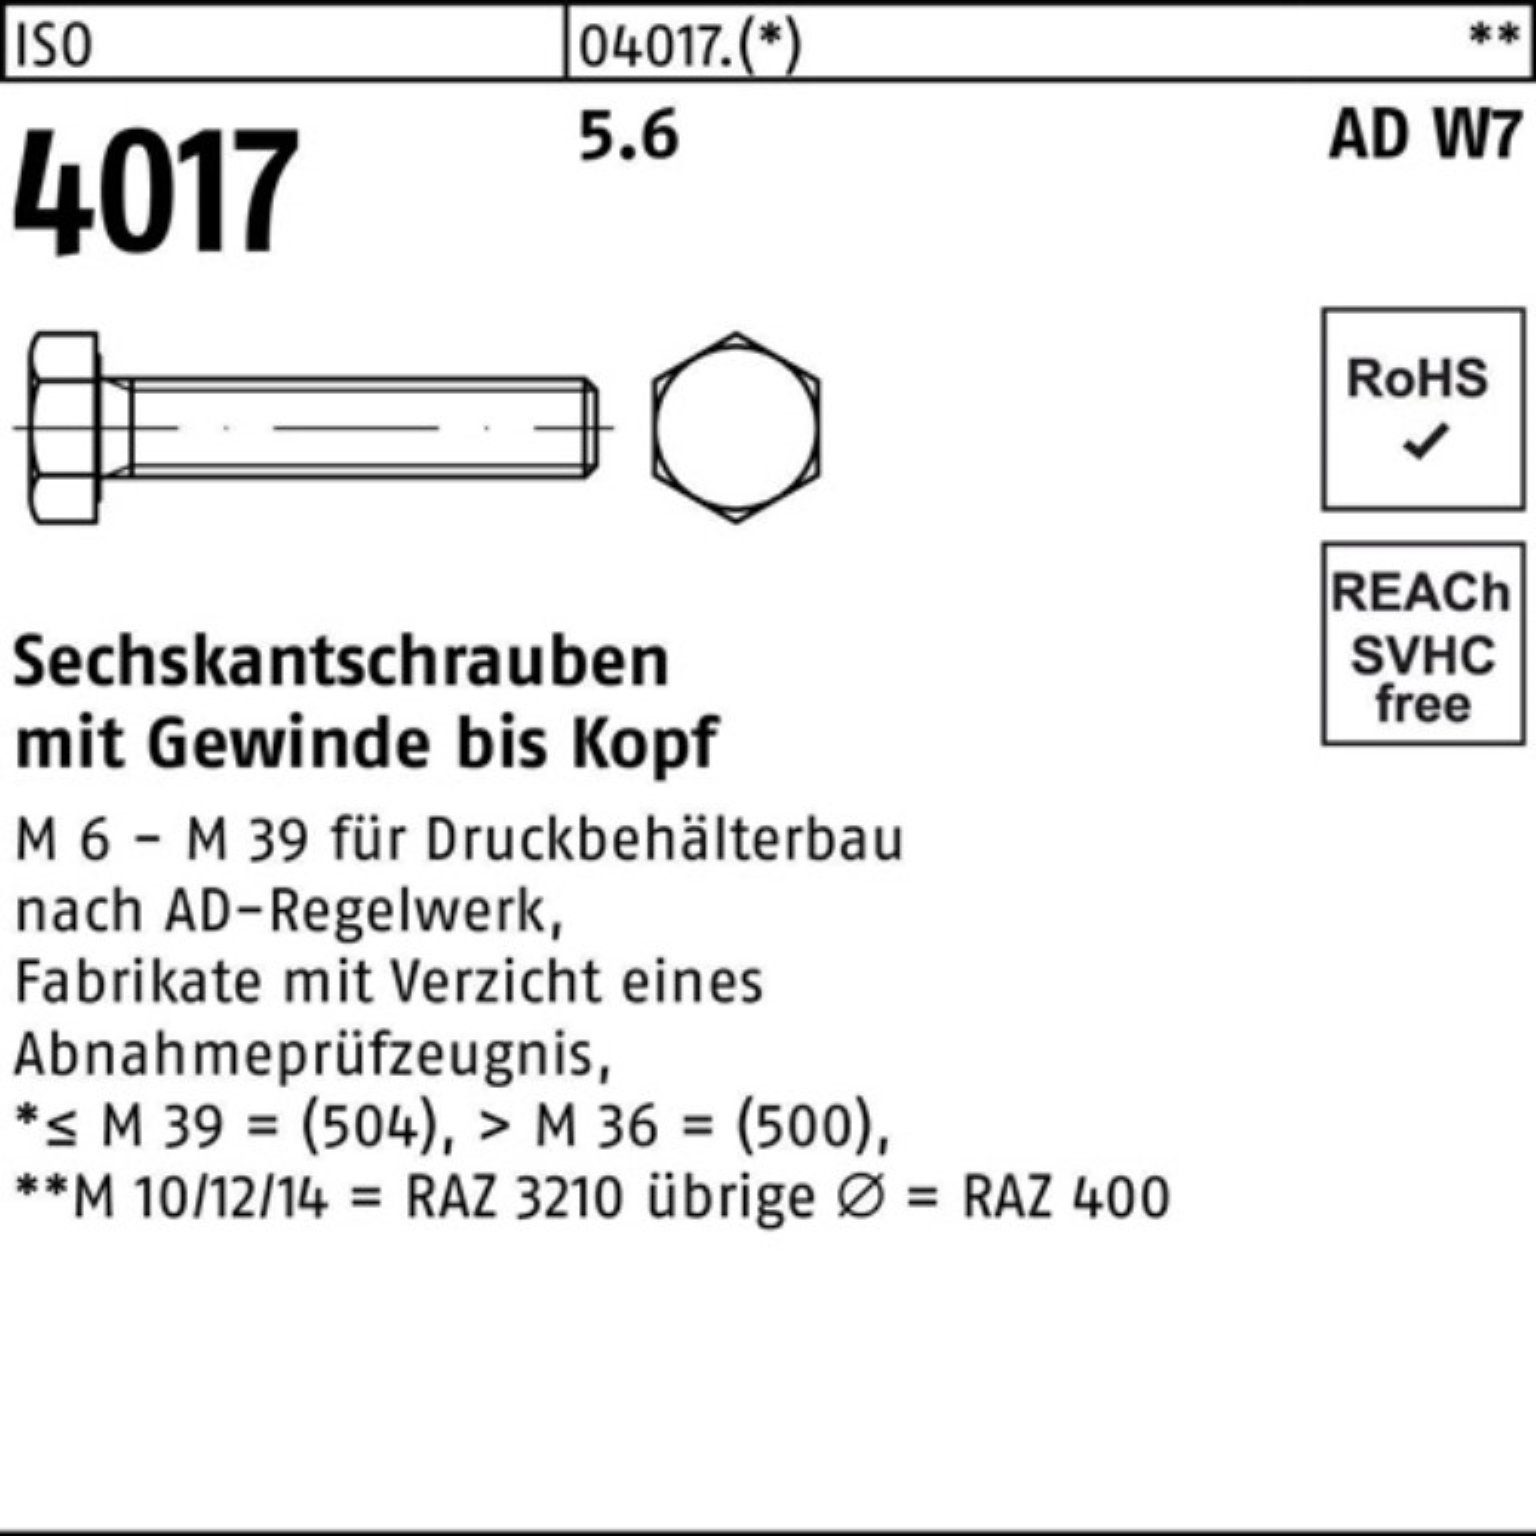 Bufab Sechskantschraube 100er Pack Sechskantschraube ISO 4017 VG M12x 25 5.6 AD W7 100 Stück